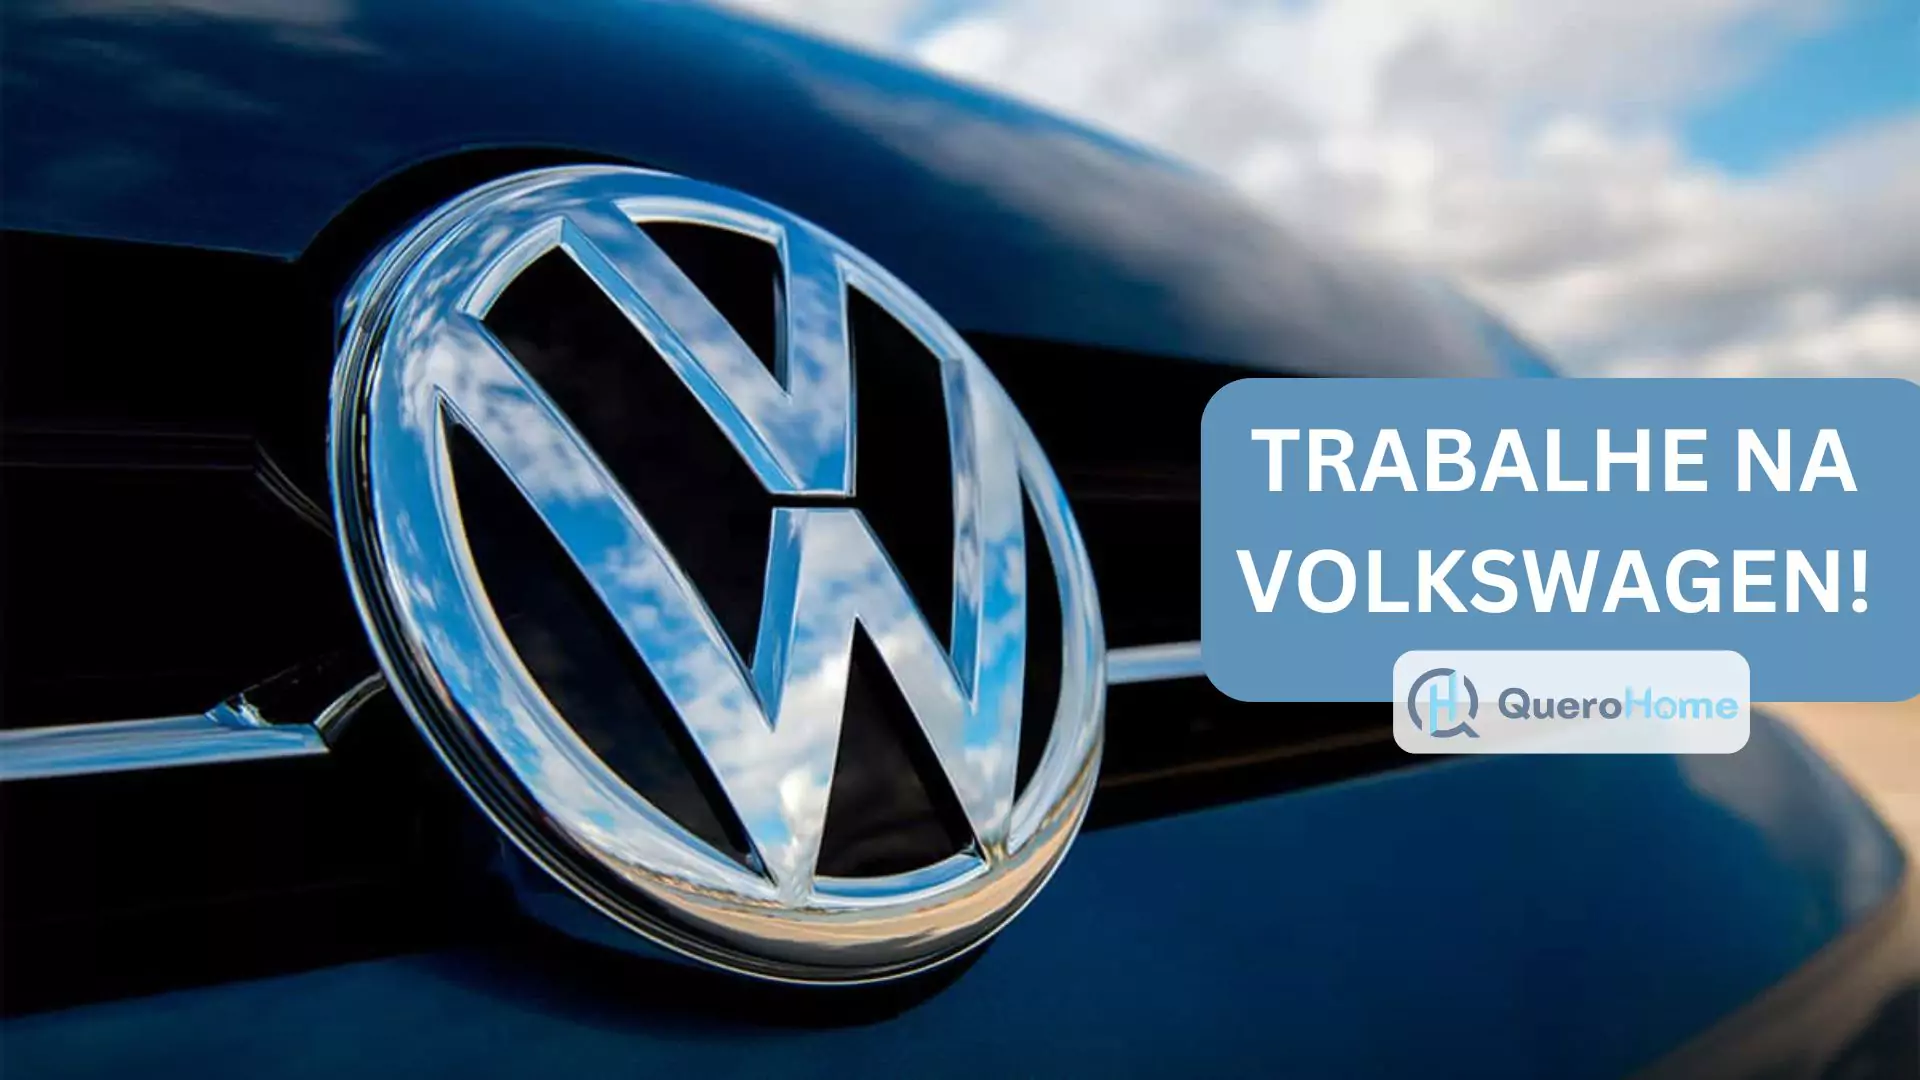 ANALISTA ADMINISTRATIVO: Ótima Vaga Aberta na Volkswagen Group com Home Office 3x na Semana!, A Volkswagen Abriu Vaga para Analista com 3 Dias de Home Office!